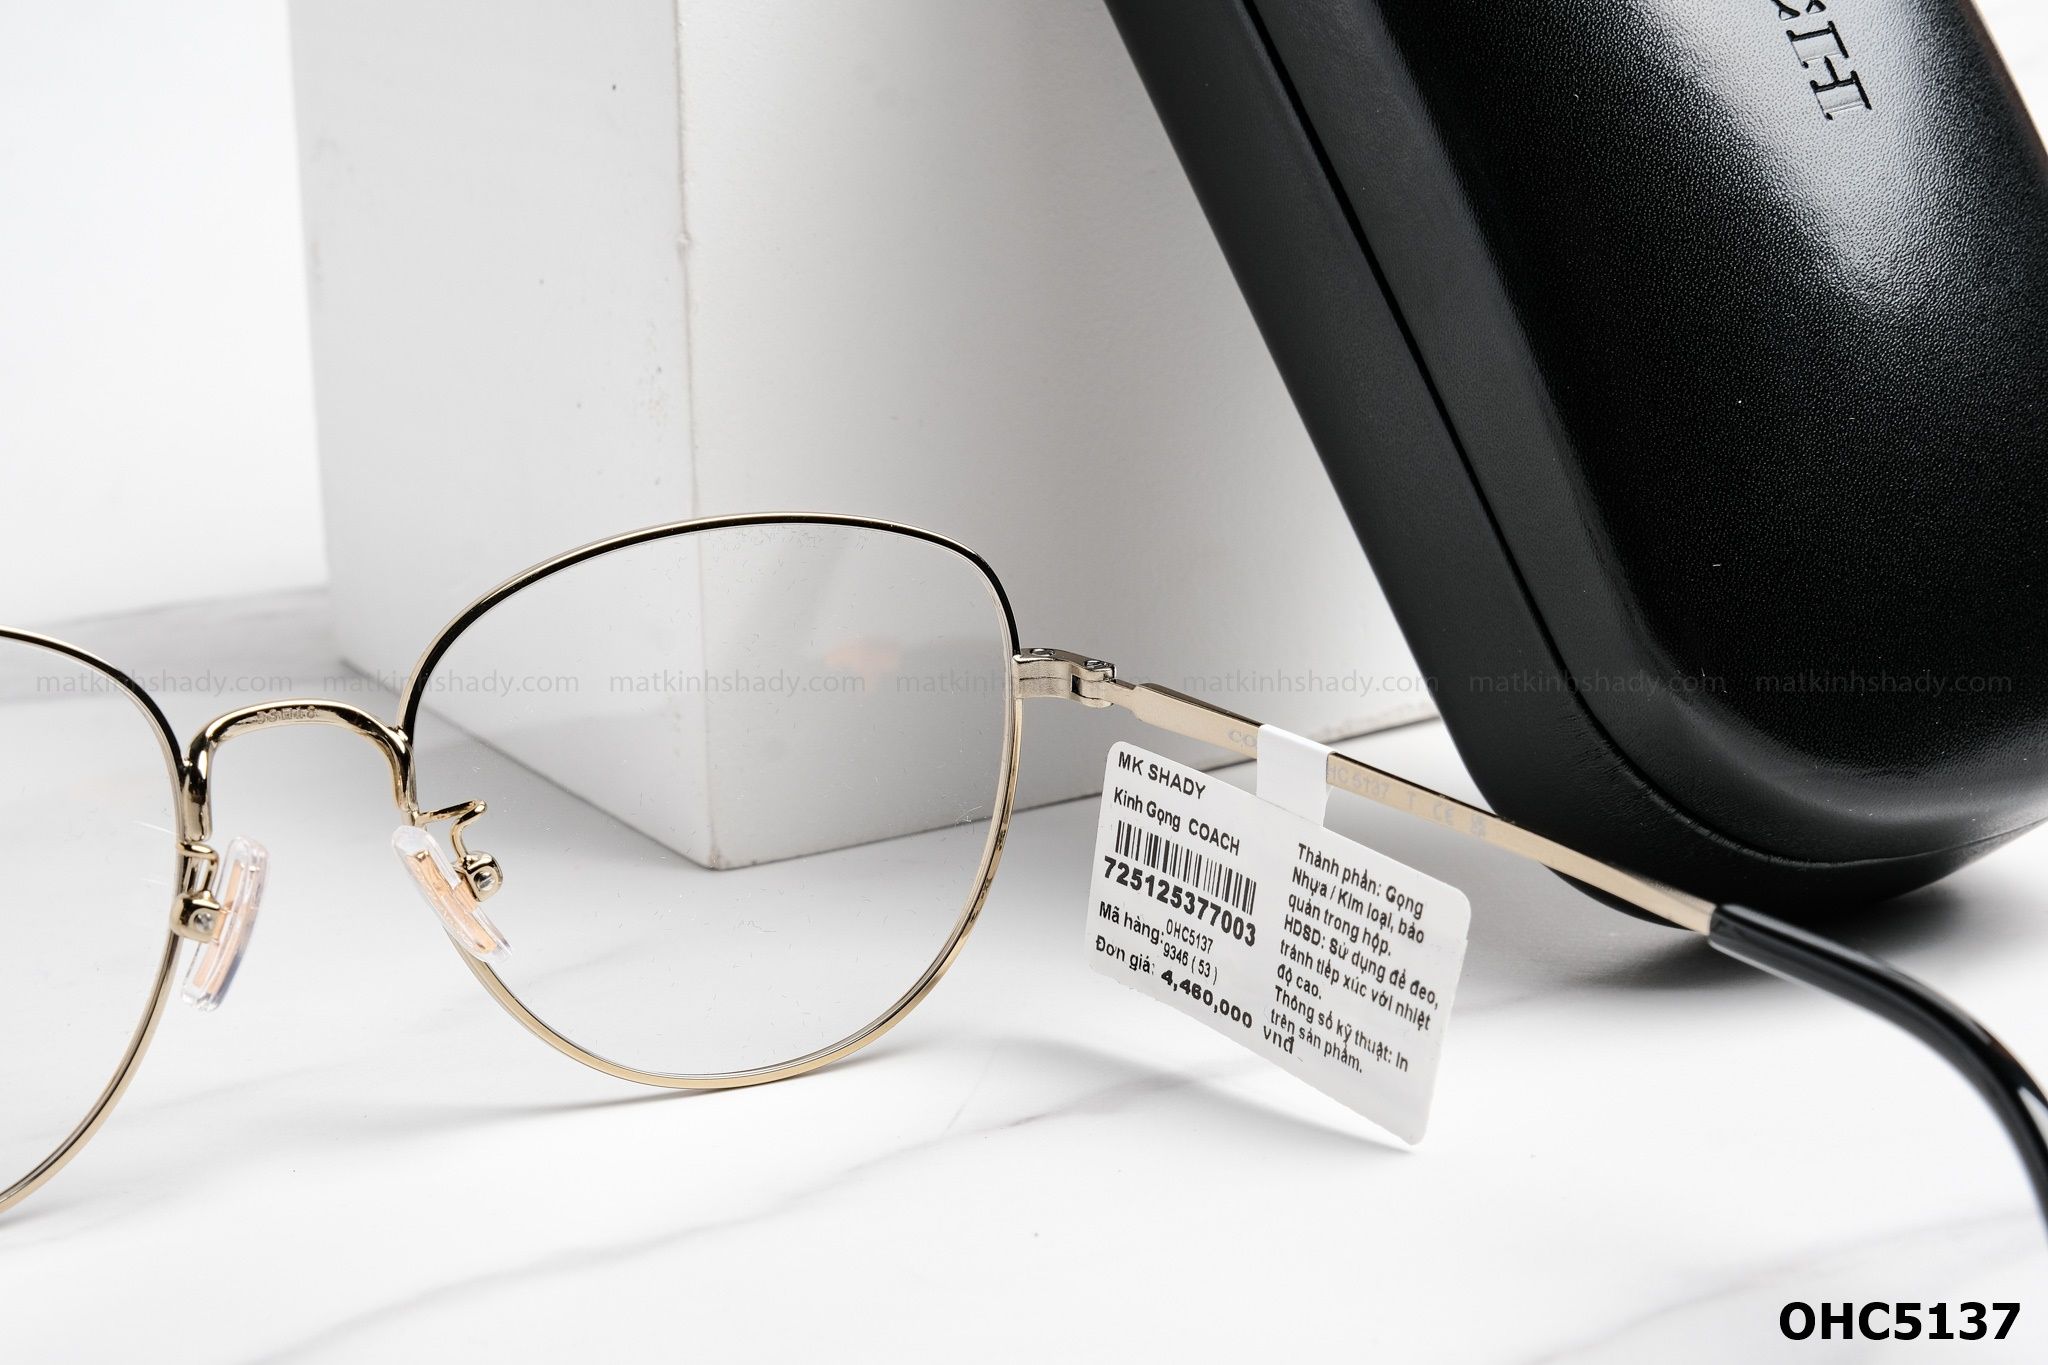  Coach Eyewear - Glasses - OHC5137 